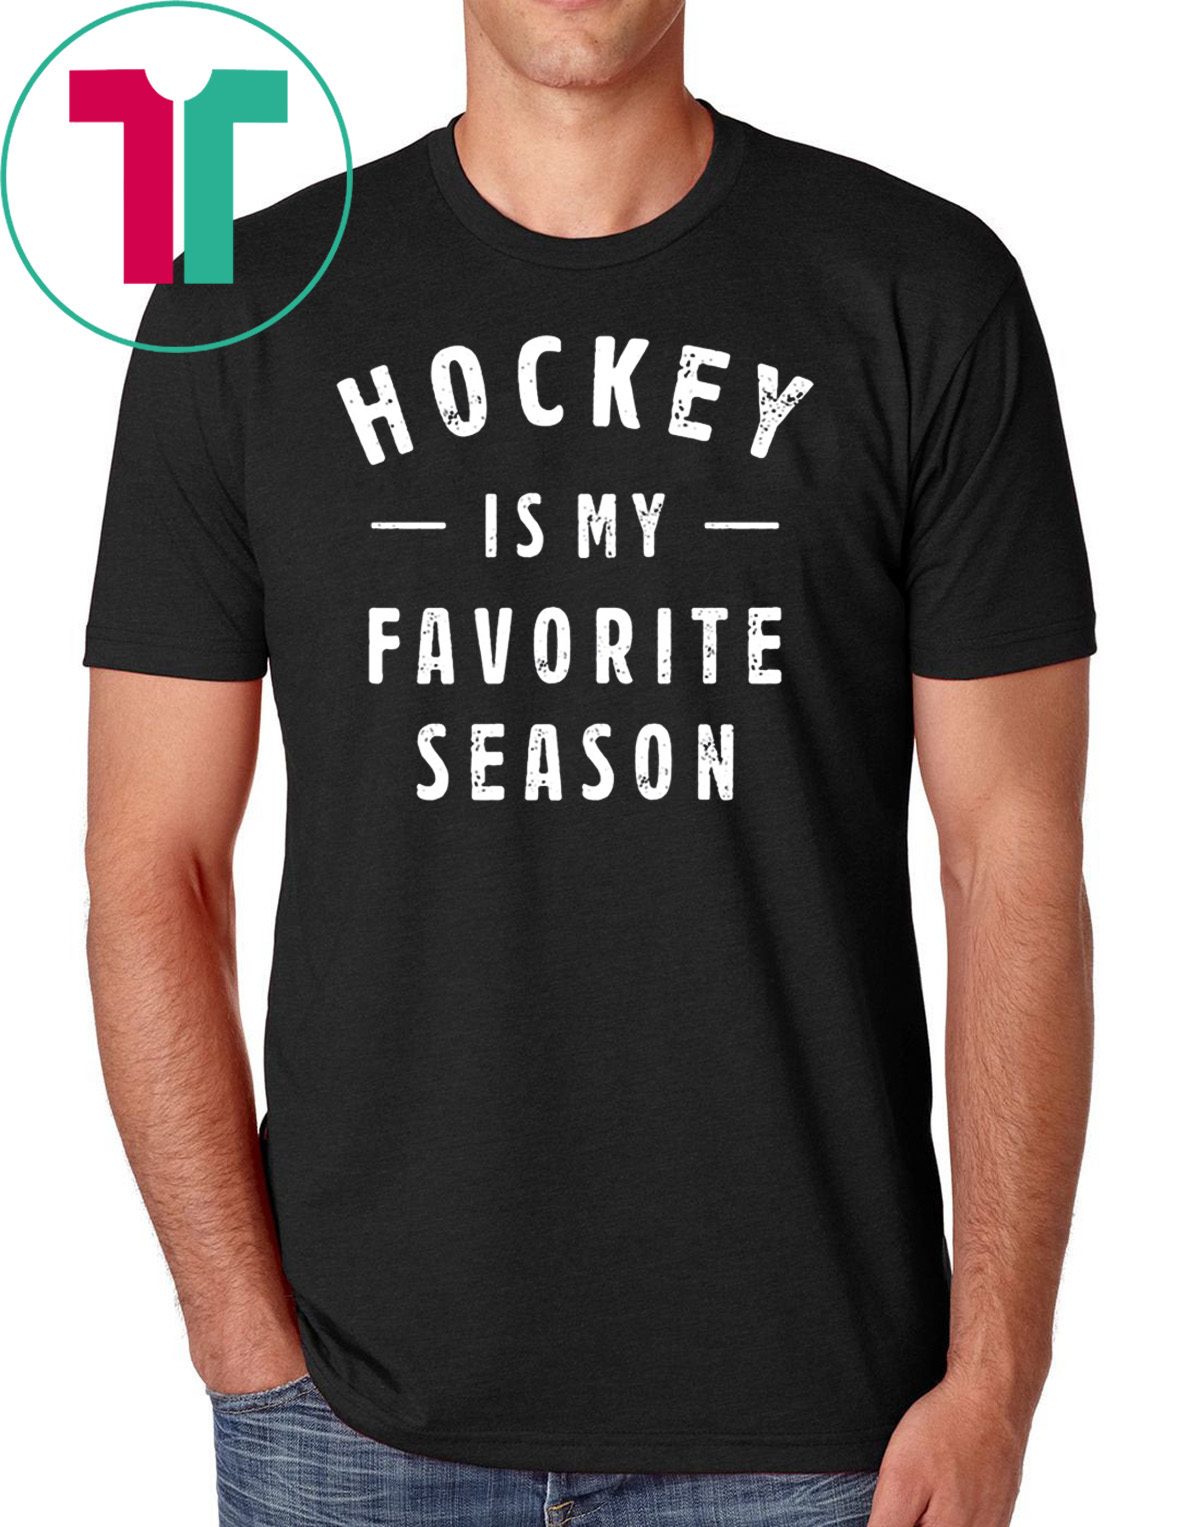 Hockey is my favorite season t-shirt - Reviewshirts Office